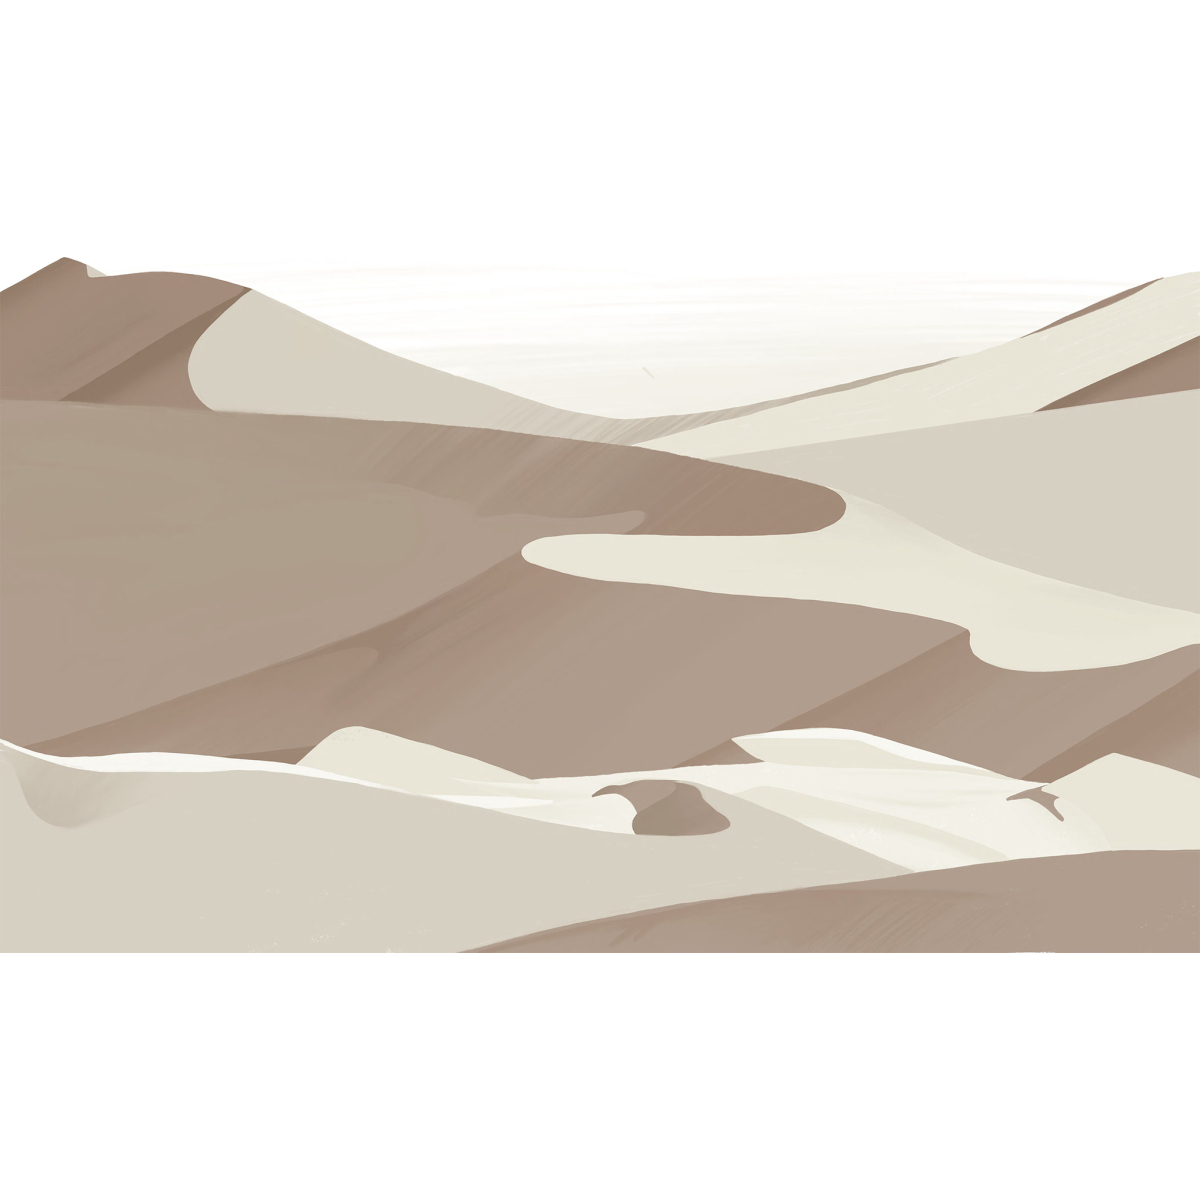 Panoramic wallpaper Dunes of Studio Romiche - Acte-Deco